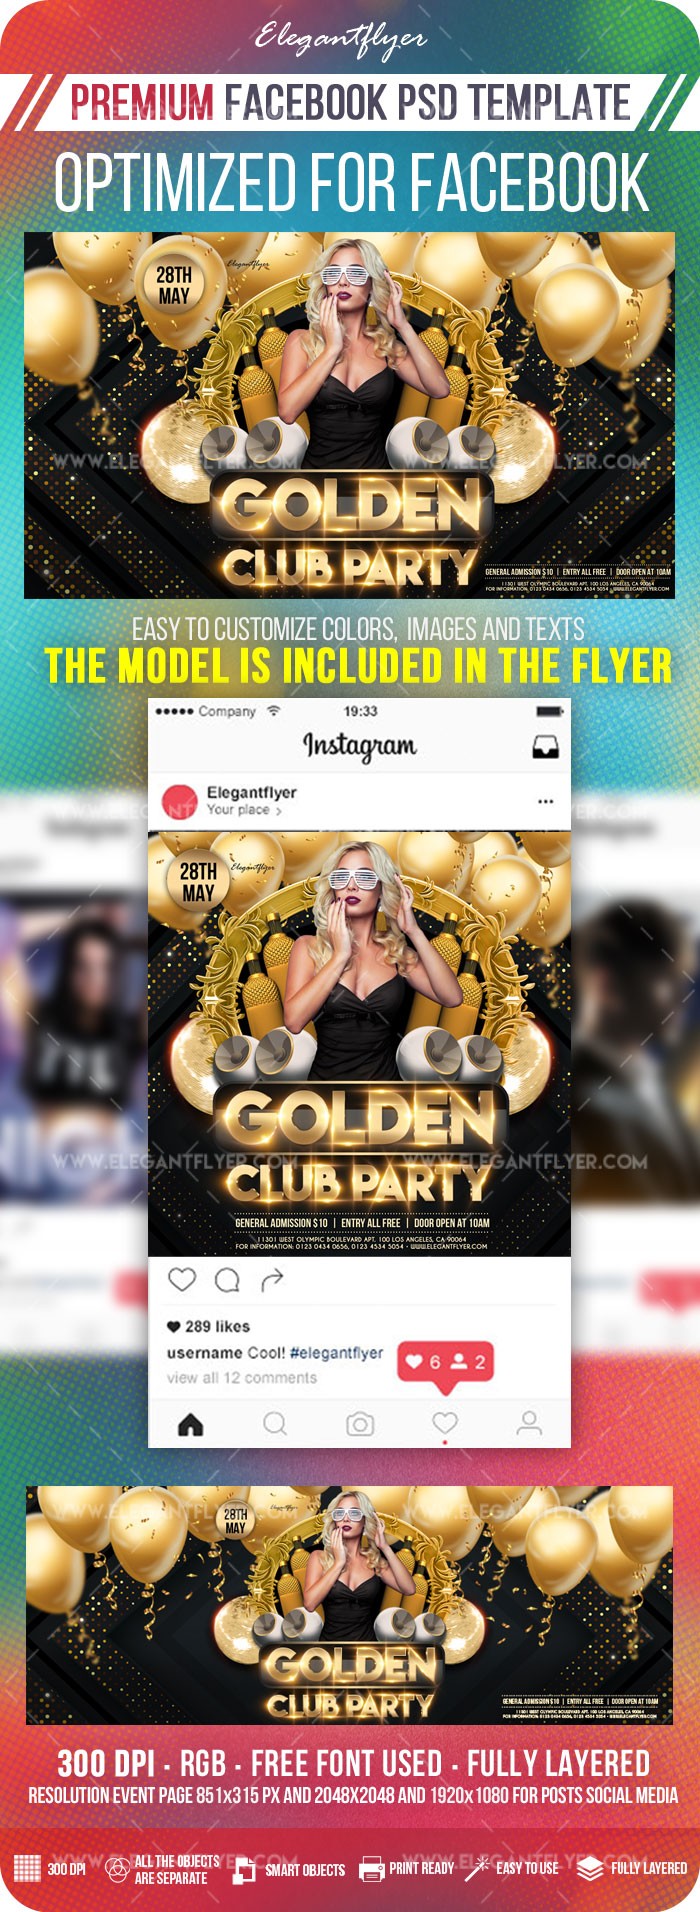 Golden Club Party Facebook by ElegantFlyer